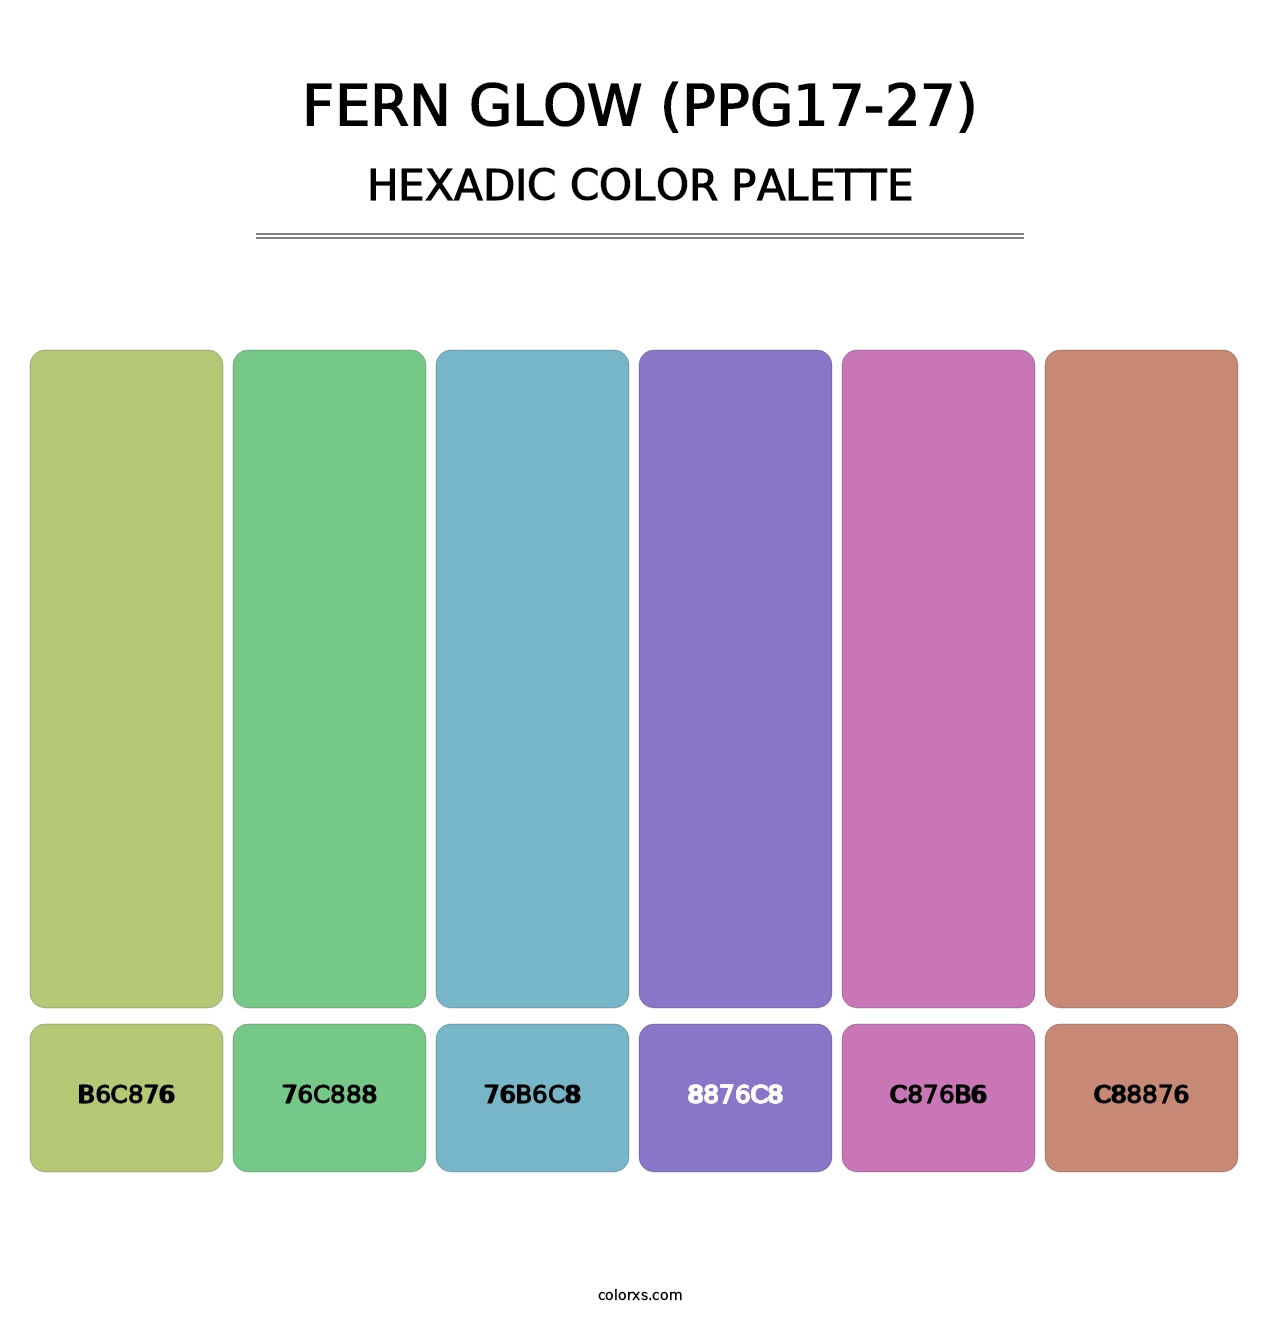 Fern Glow (PPG17-27) - Hexadic Color Palette